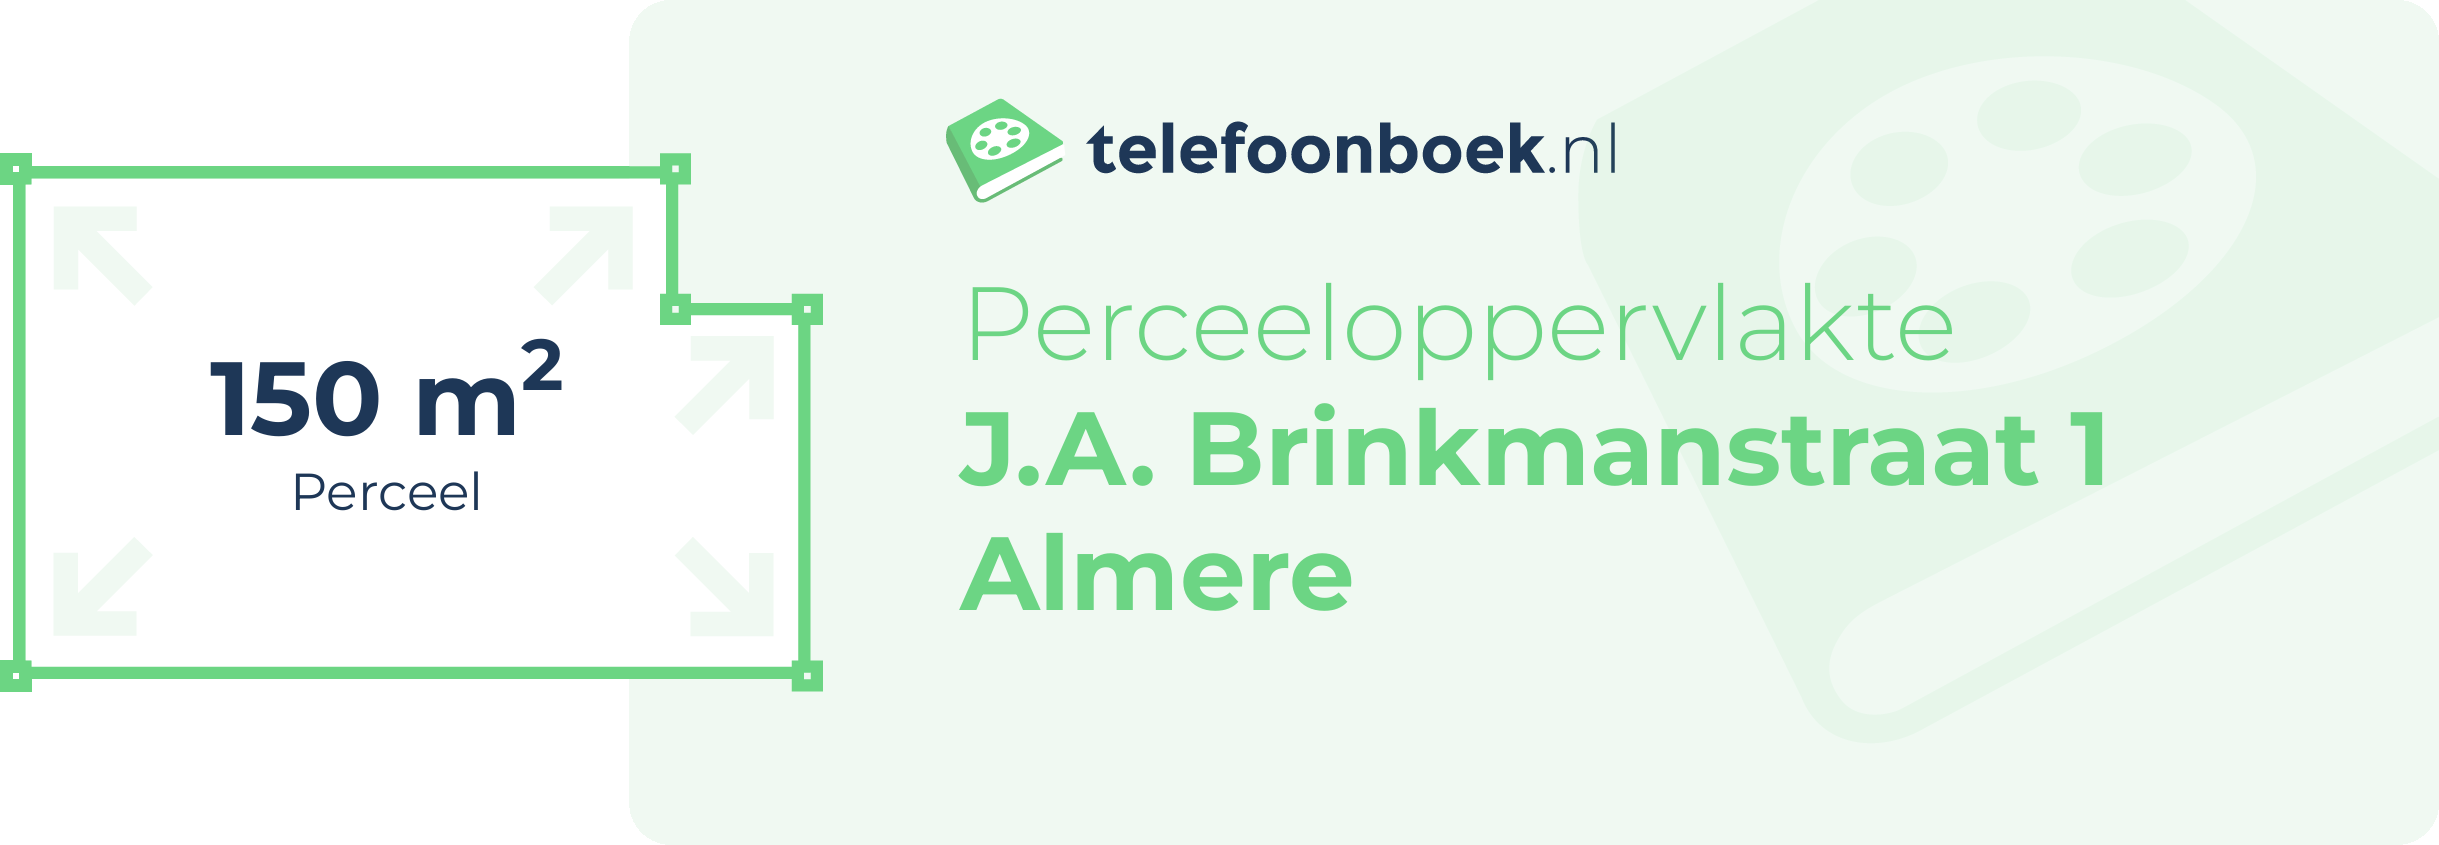 Perceeloppervlakte J.A. Brinkmanstraat 1 Almere